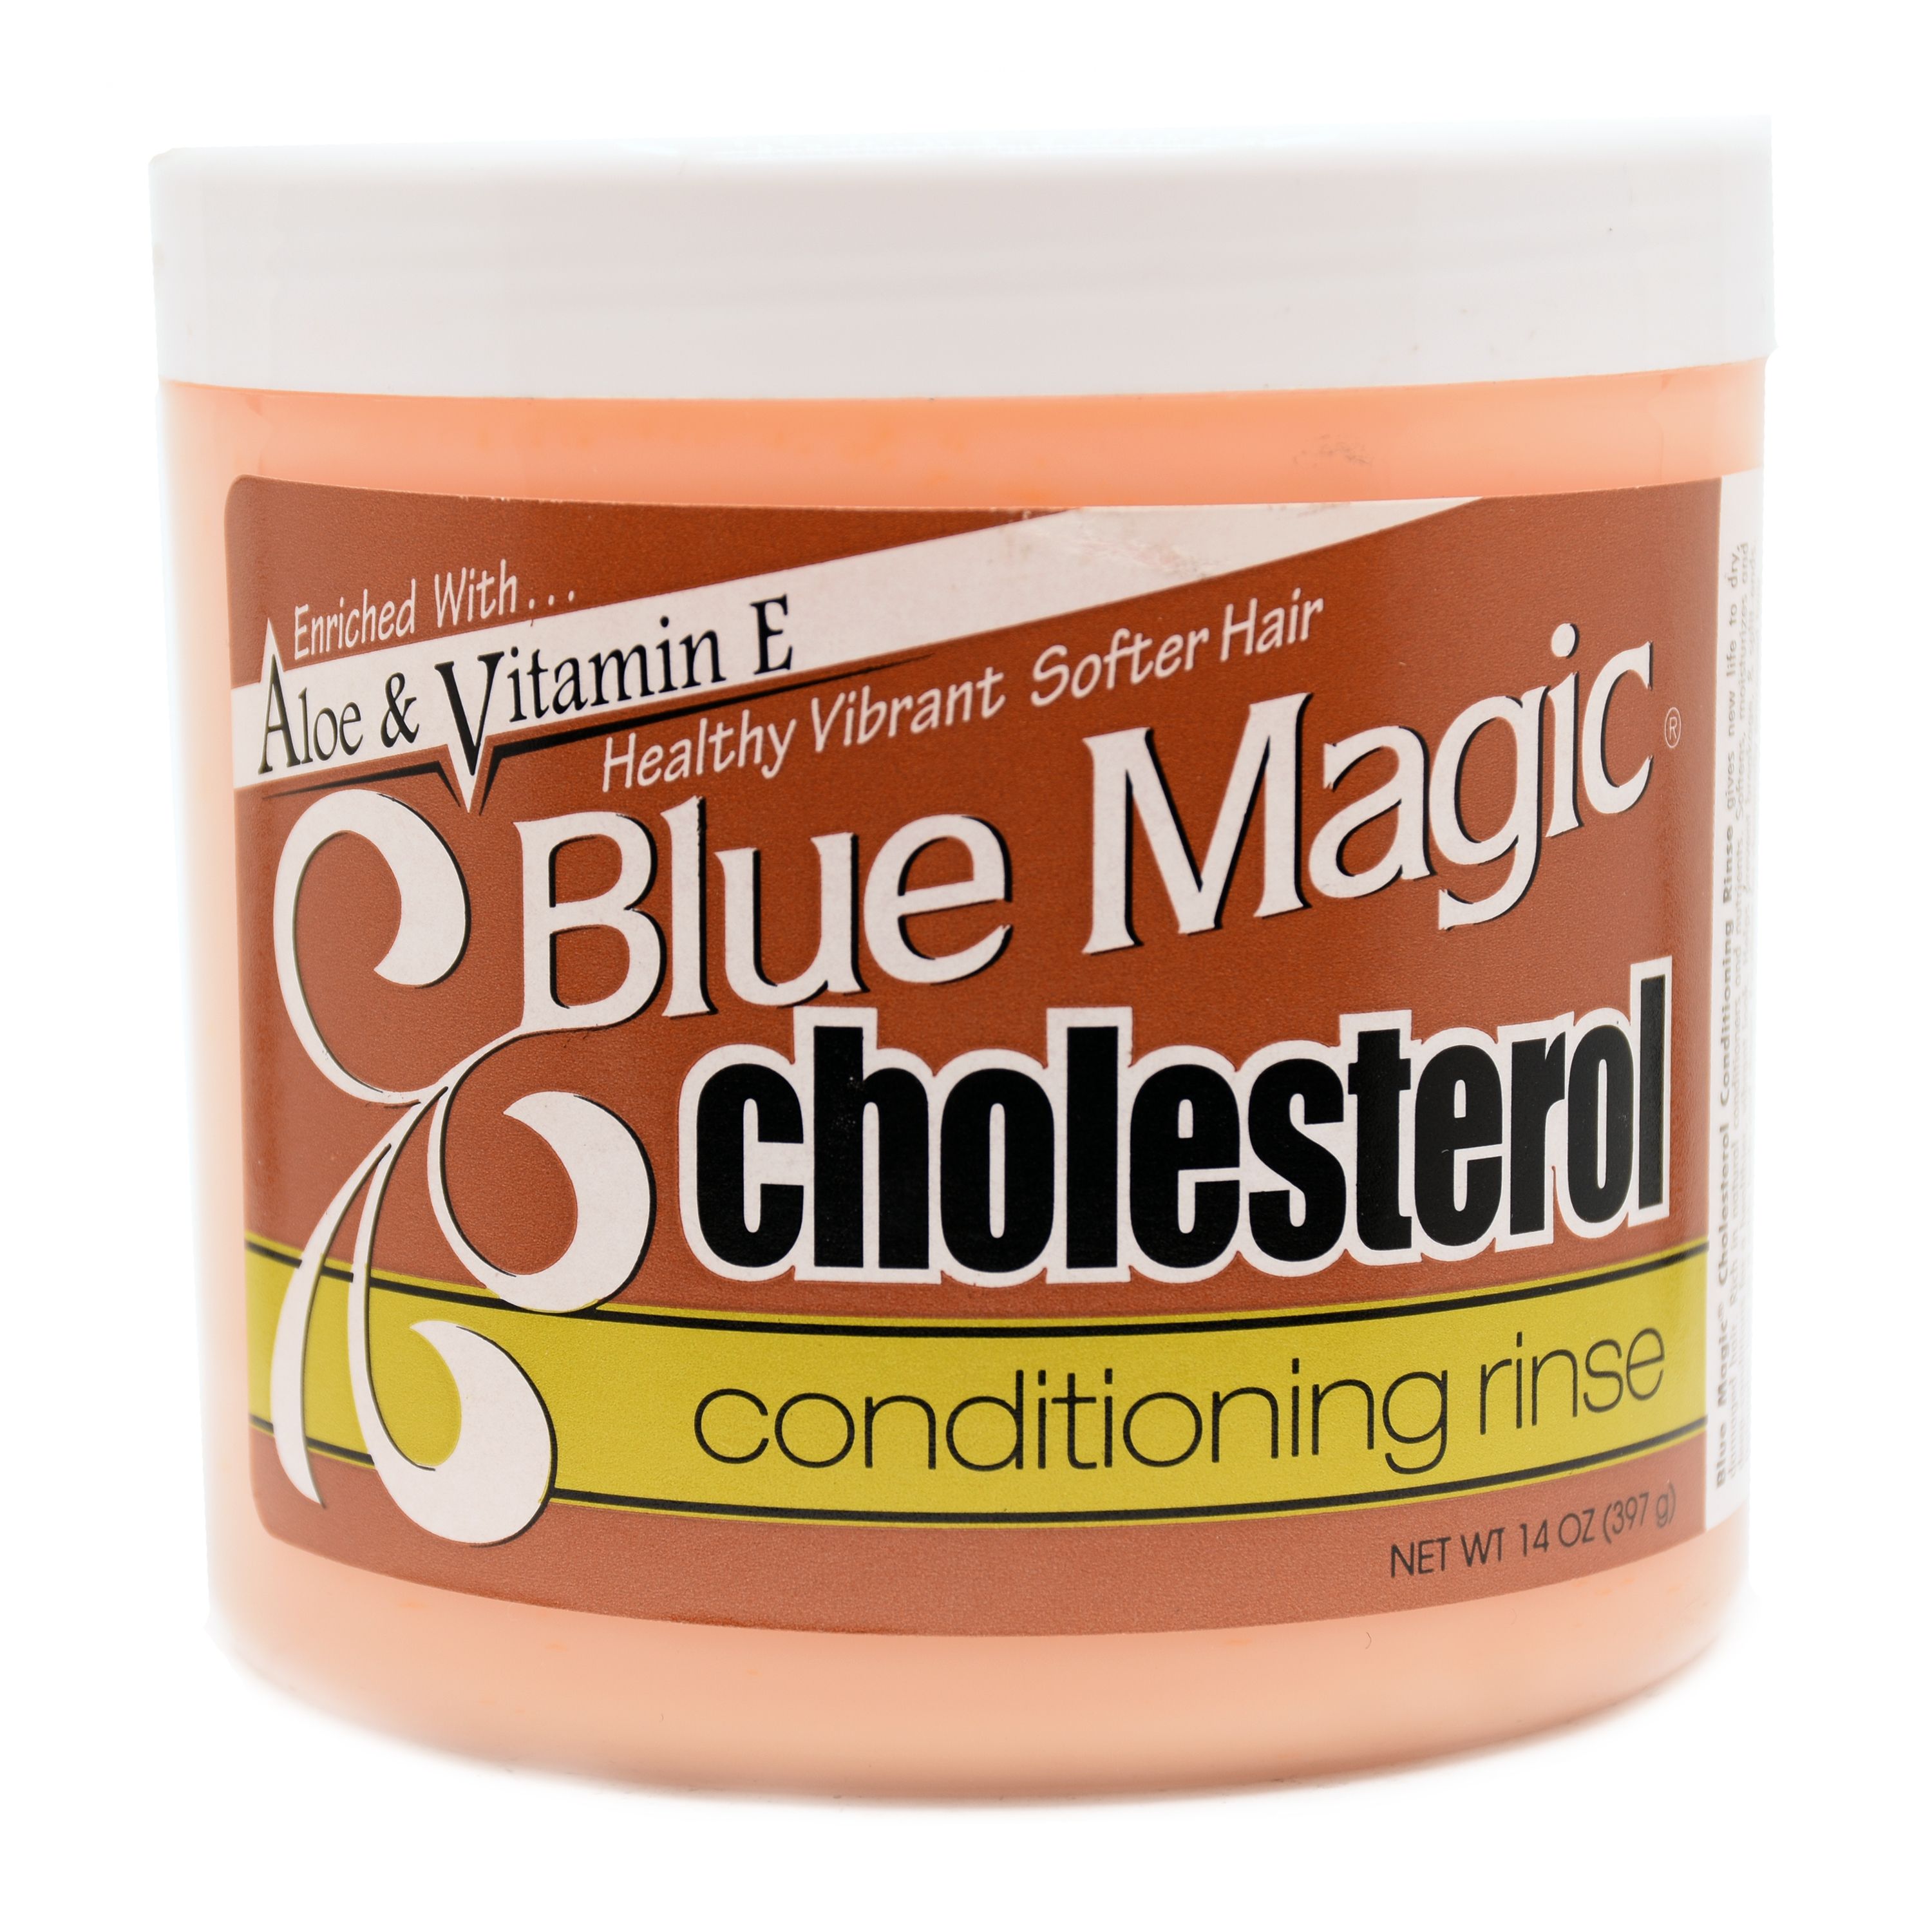 Blue Magic Cholesterol Conditioning Rinse - 12oz